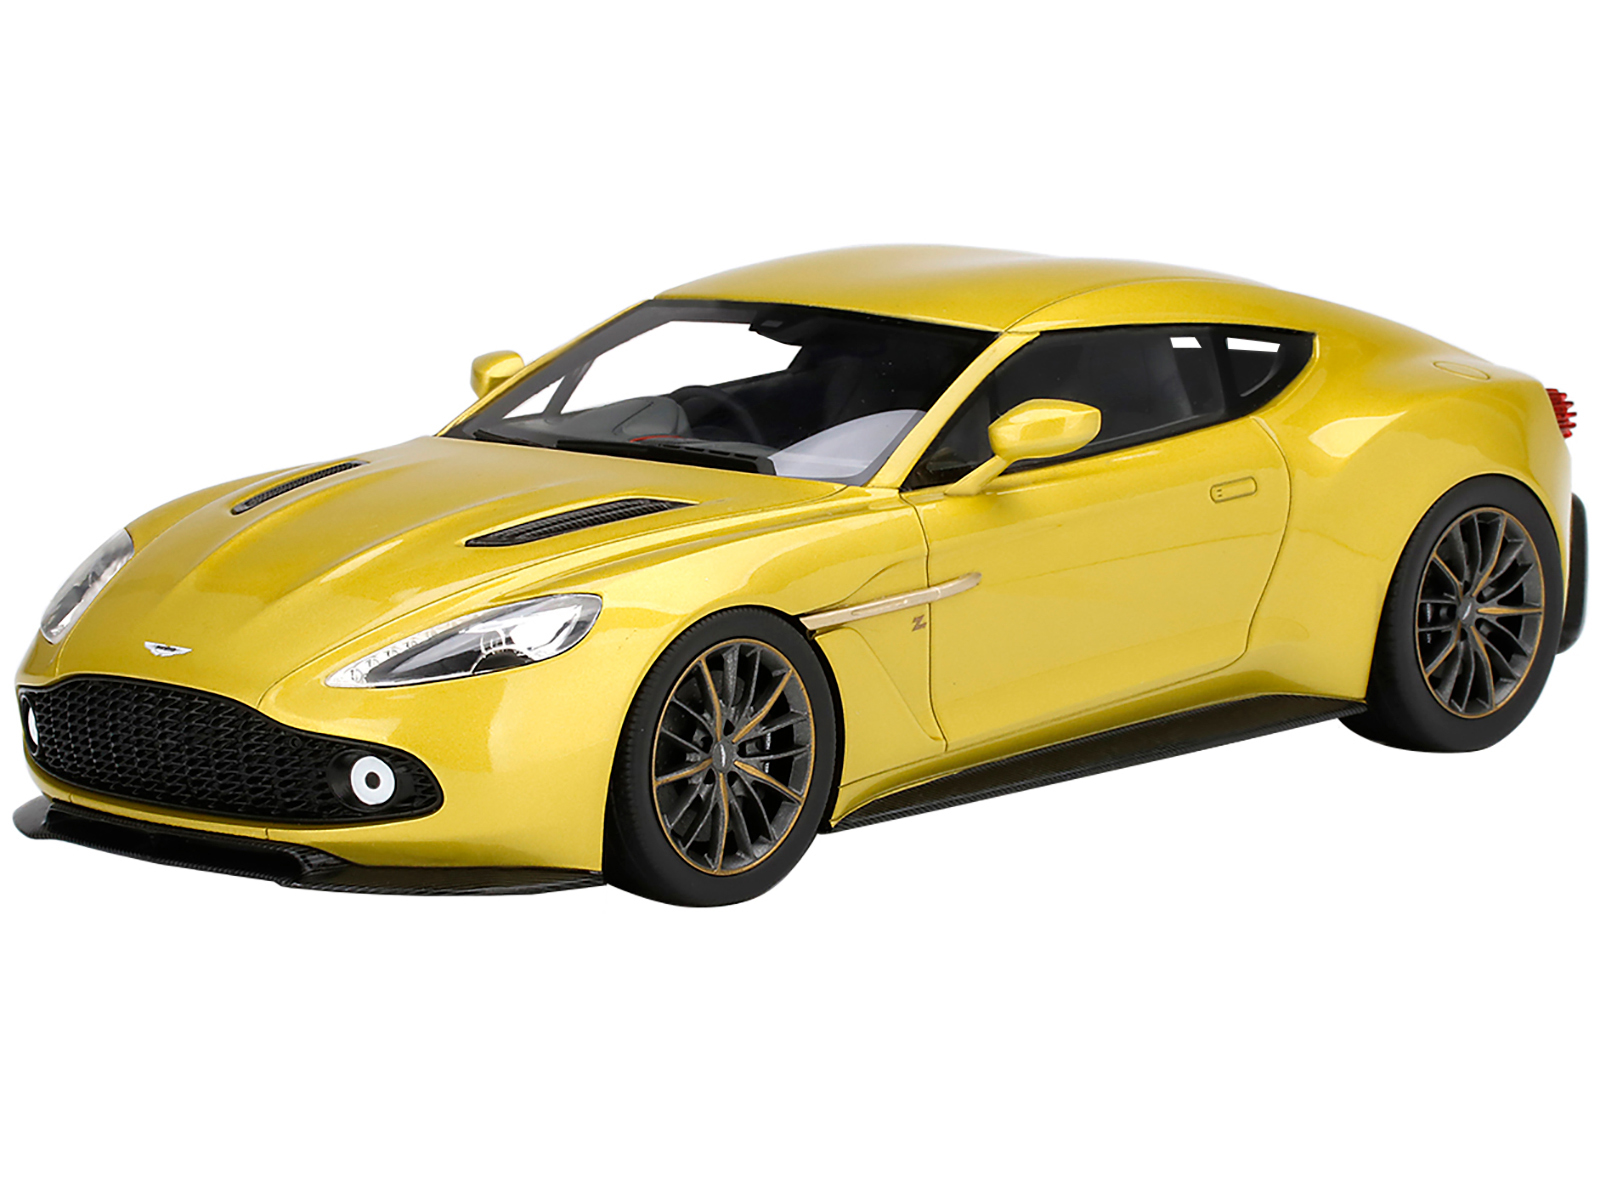 Aston Martin Vanquish Zagato RHD (Right Hand Drive) Cosmopolitan Yellow Metallic 1/18 Model Car by Top Speed